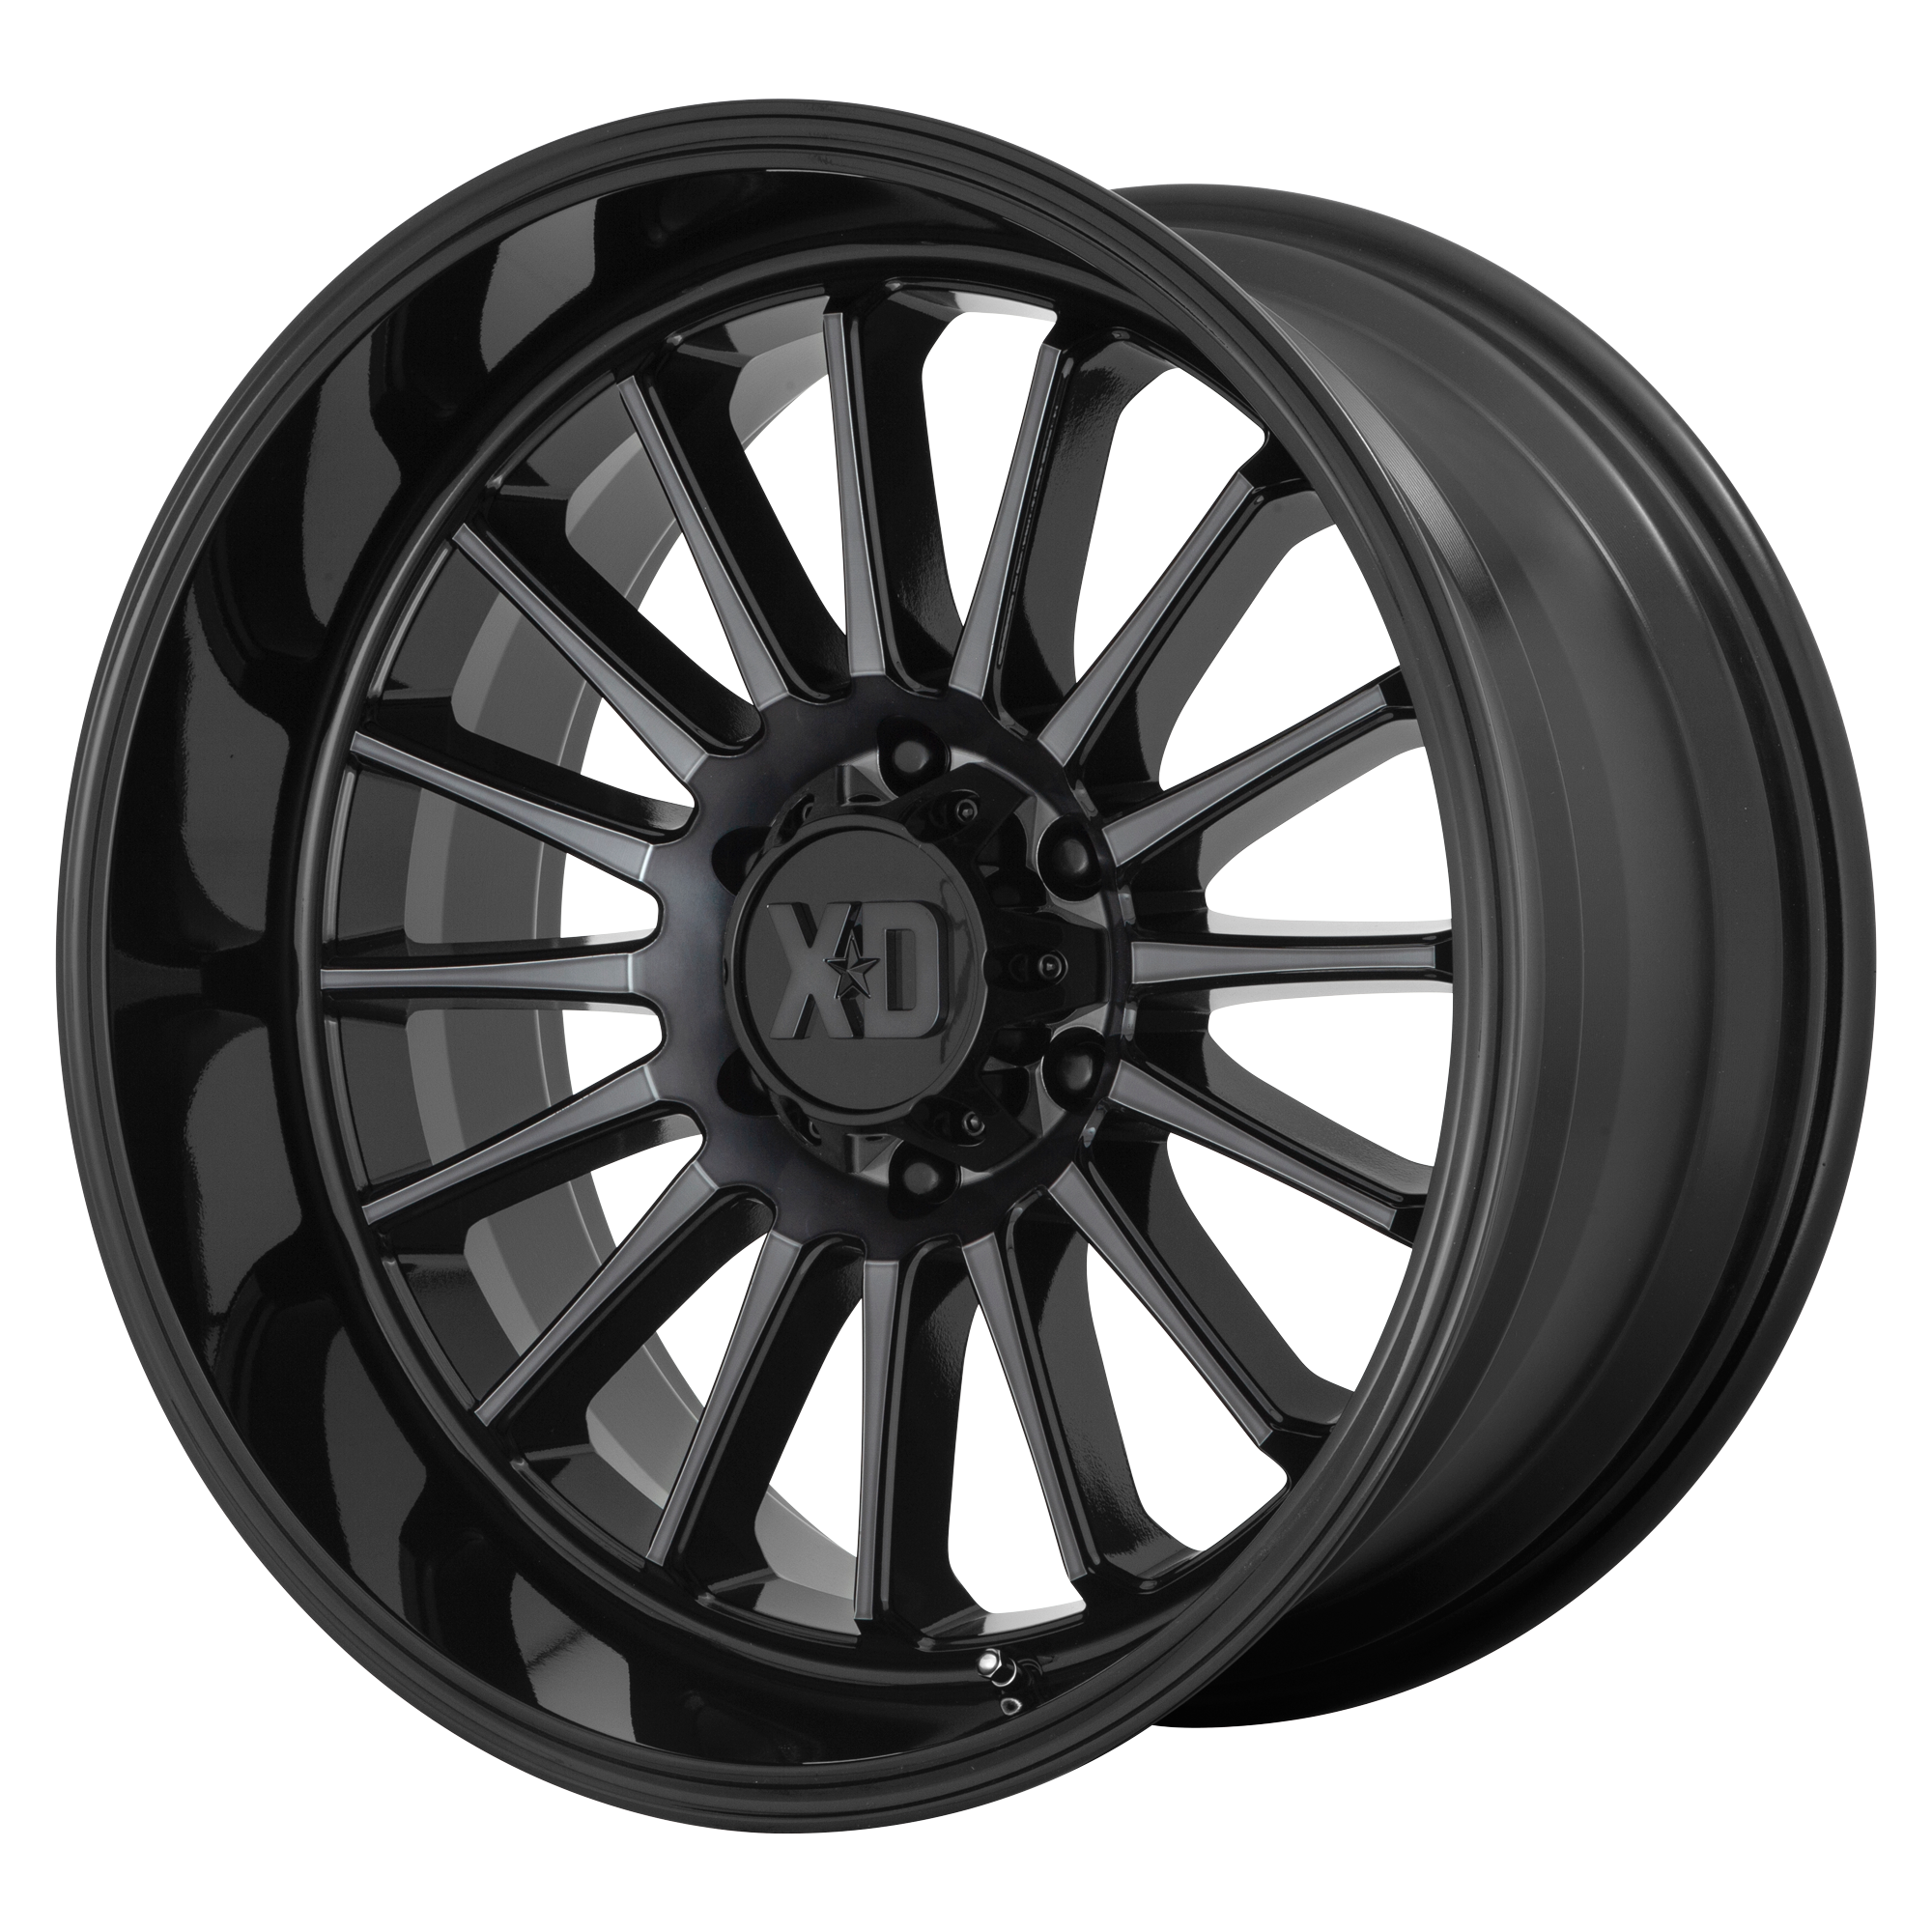 XD 20"x10" Non-Chrome Gloss Black With Gray Tint Custom Wheel ARSWCWXD85721050418N